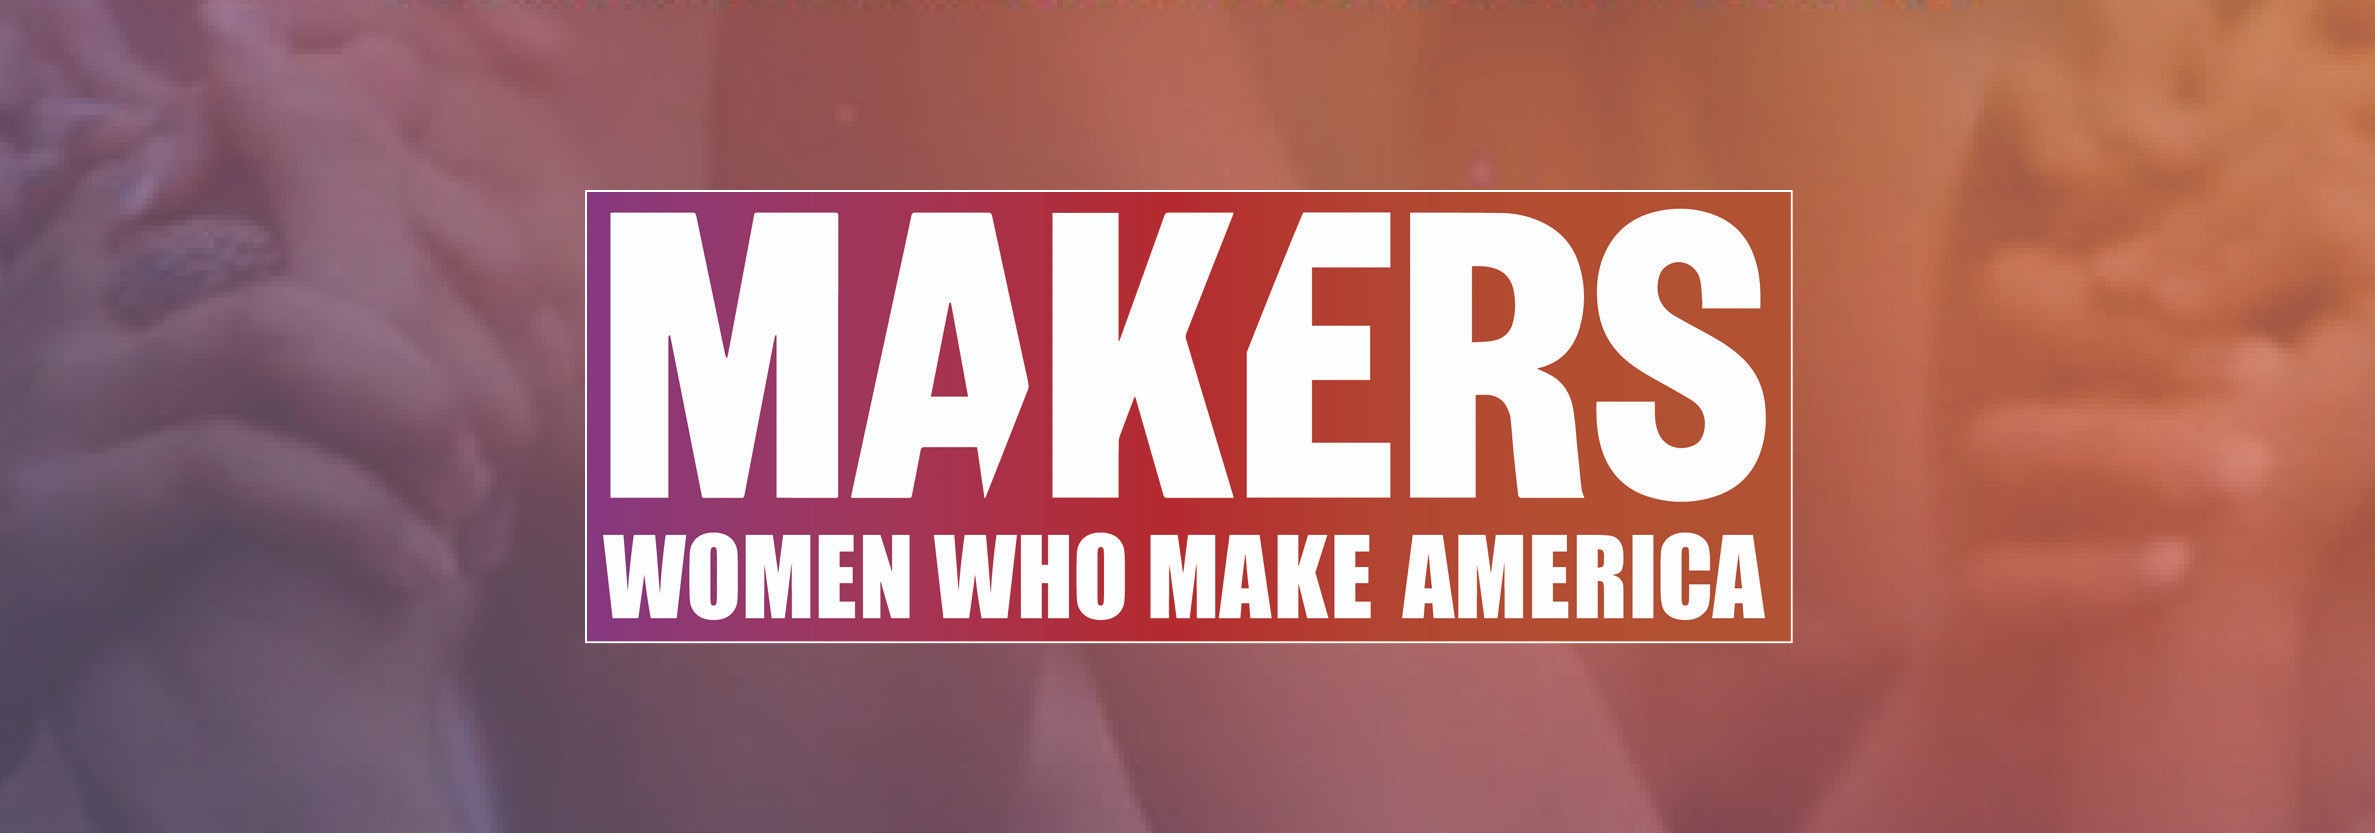 Makers_Sliders